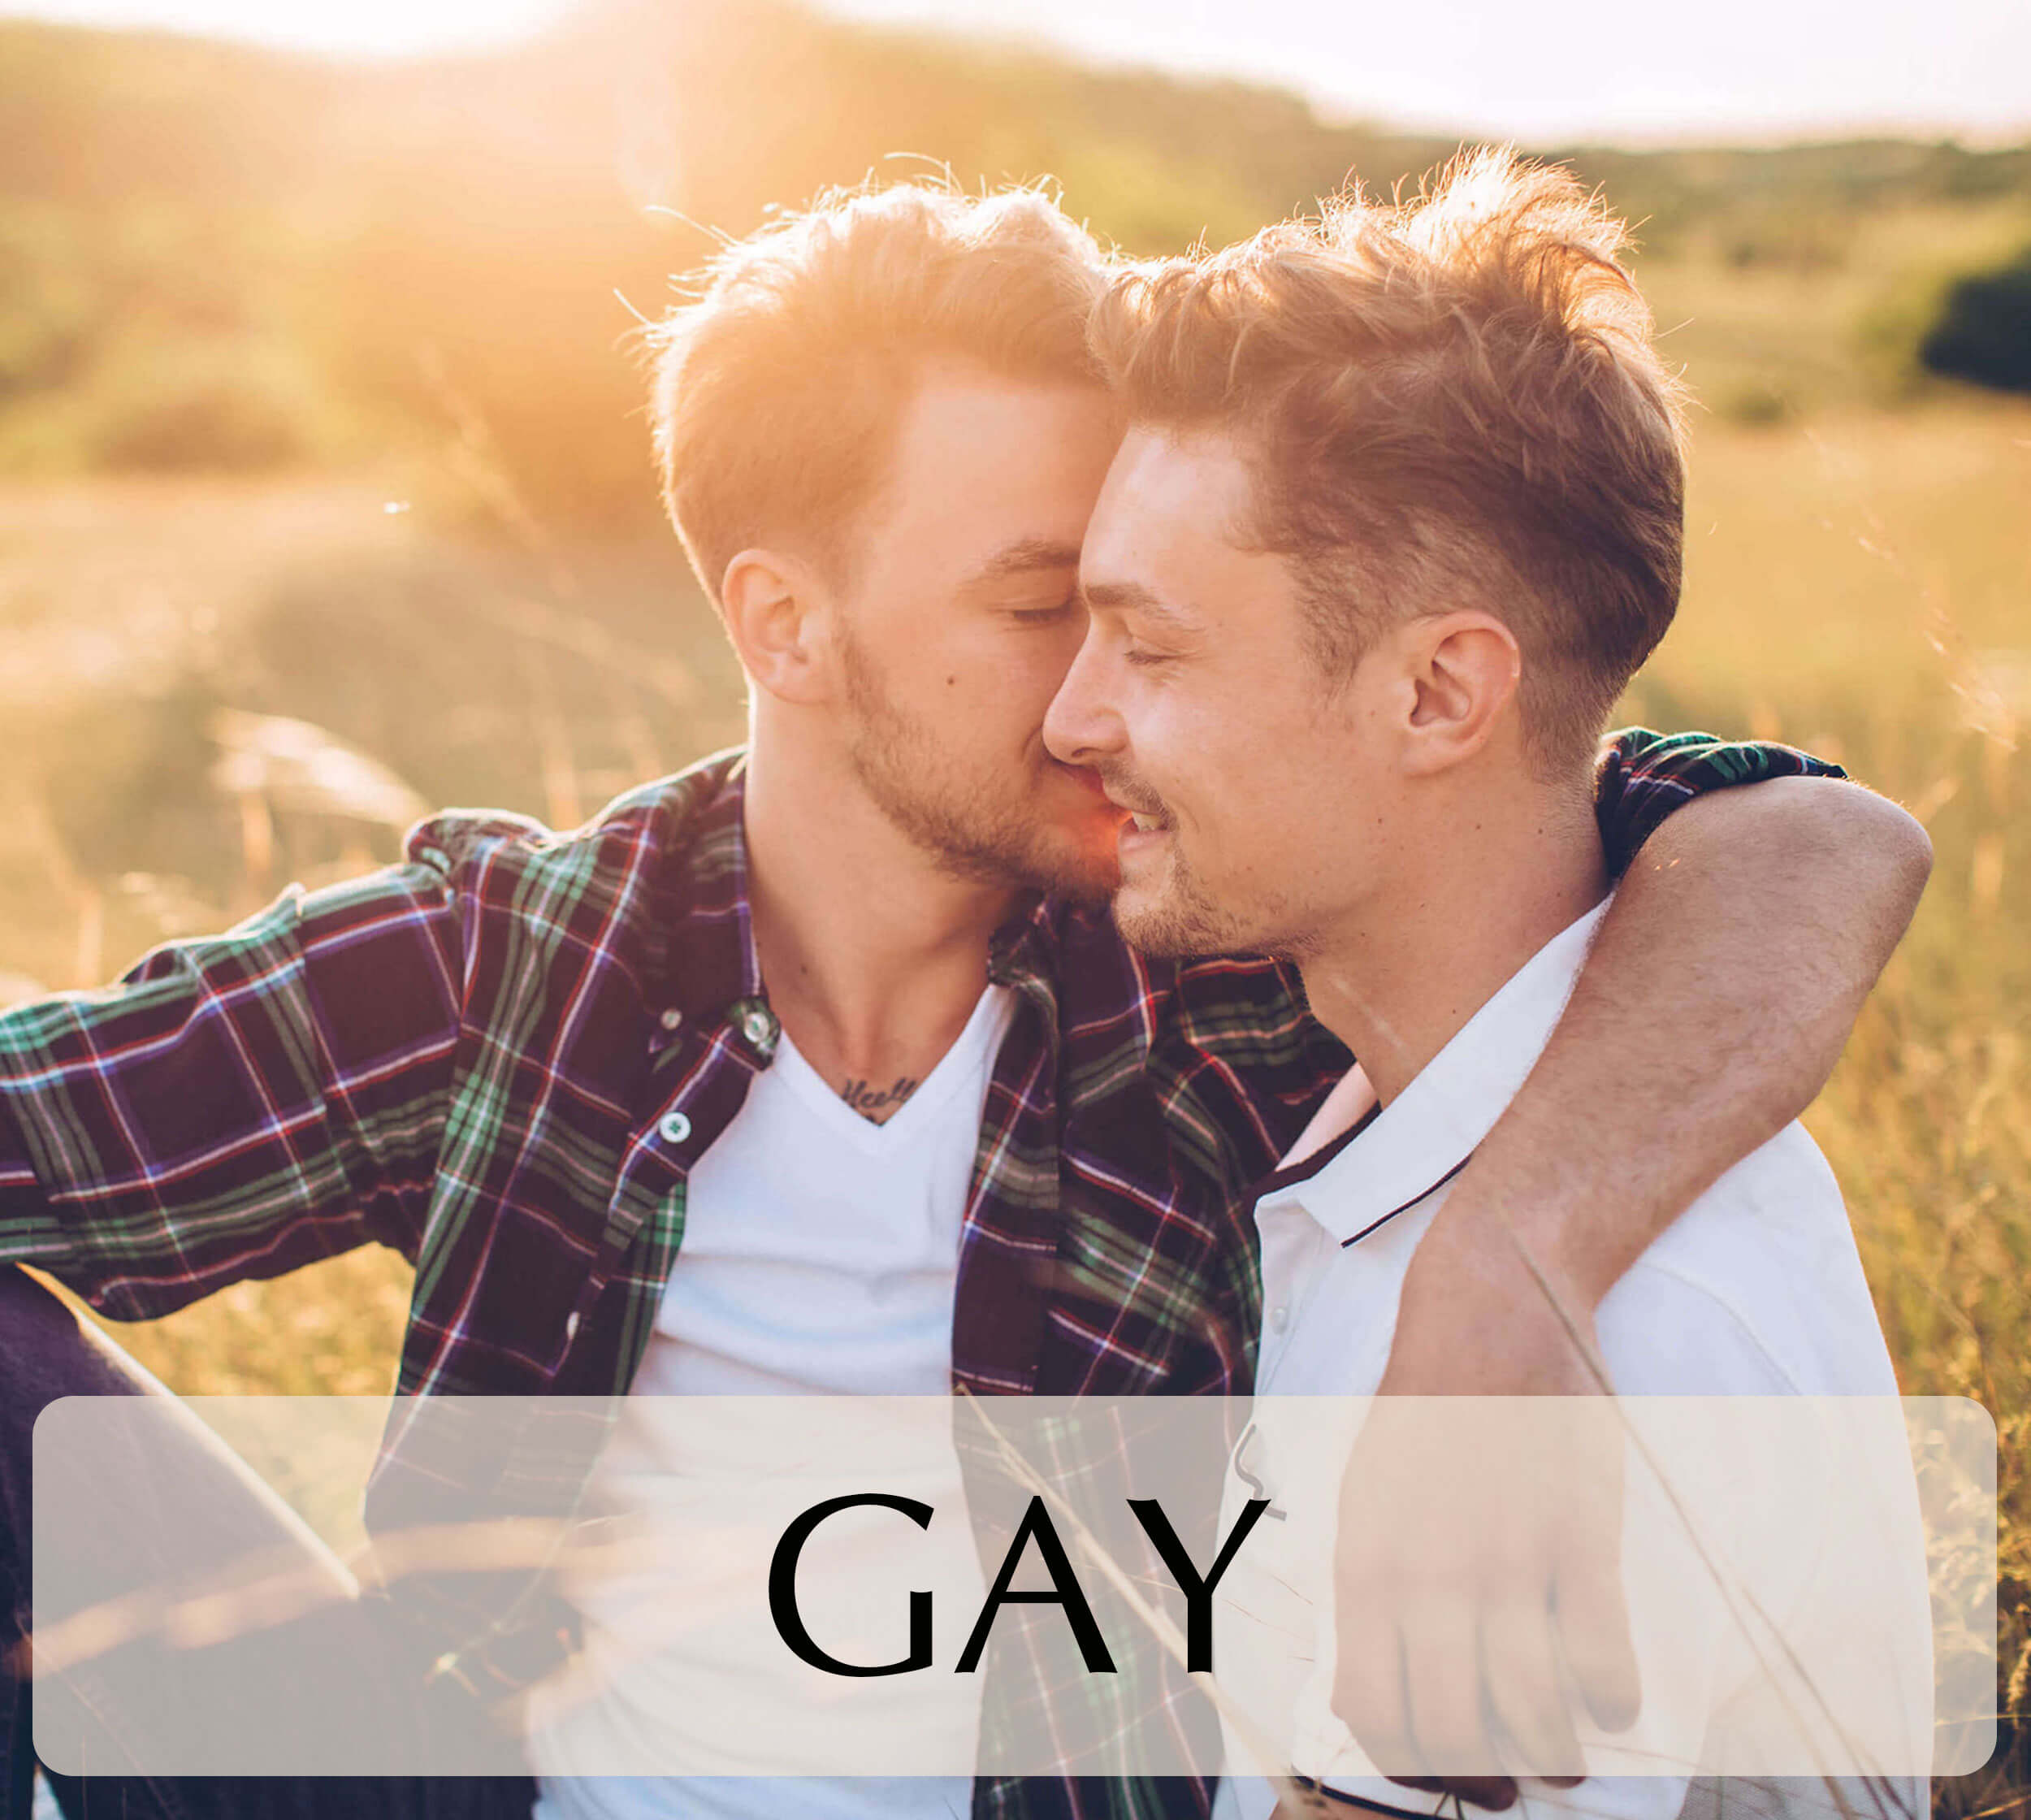 Online dating NZ gay